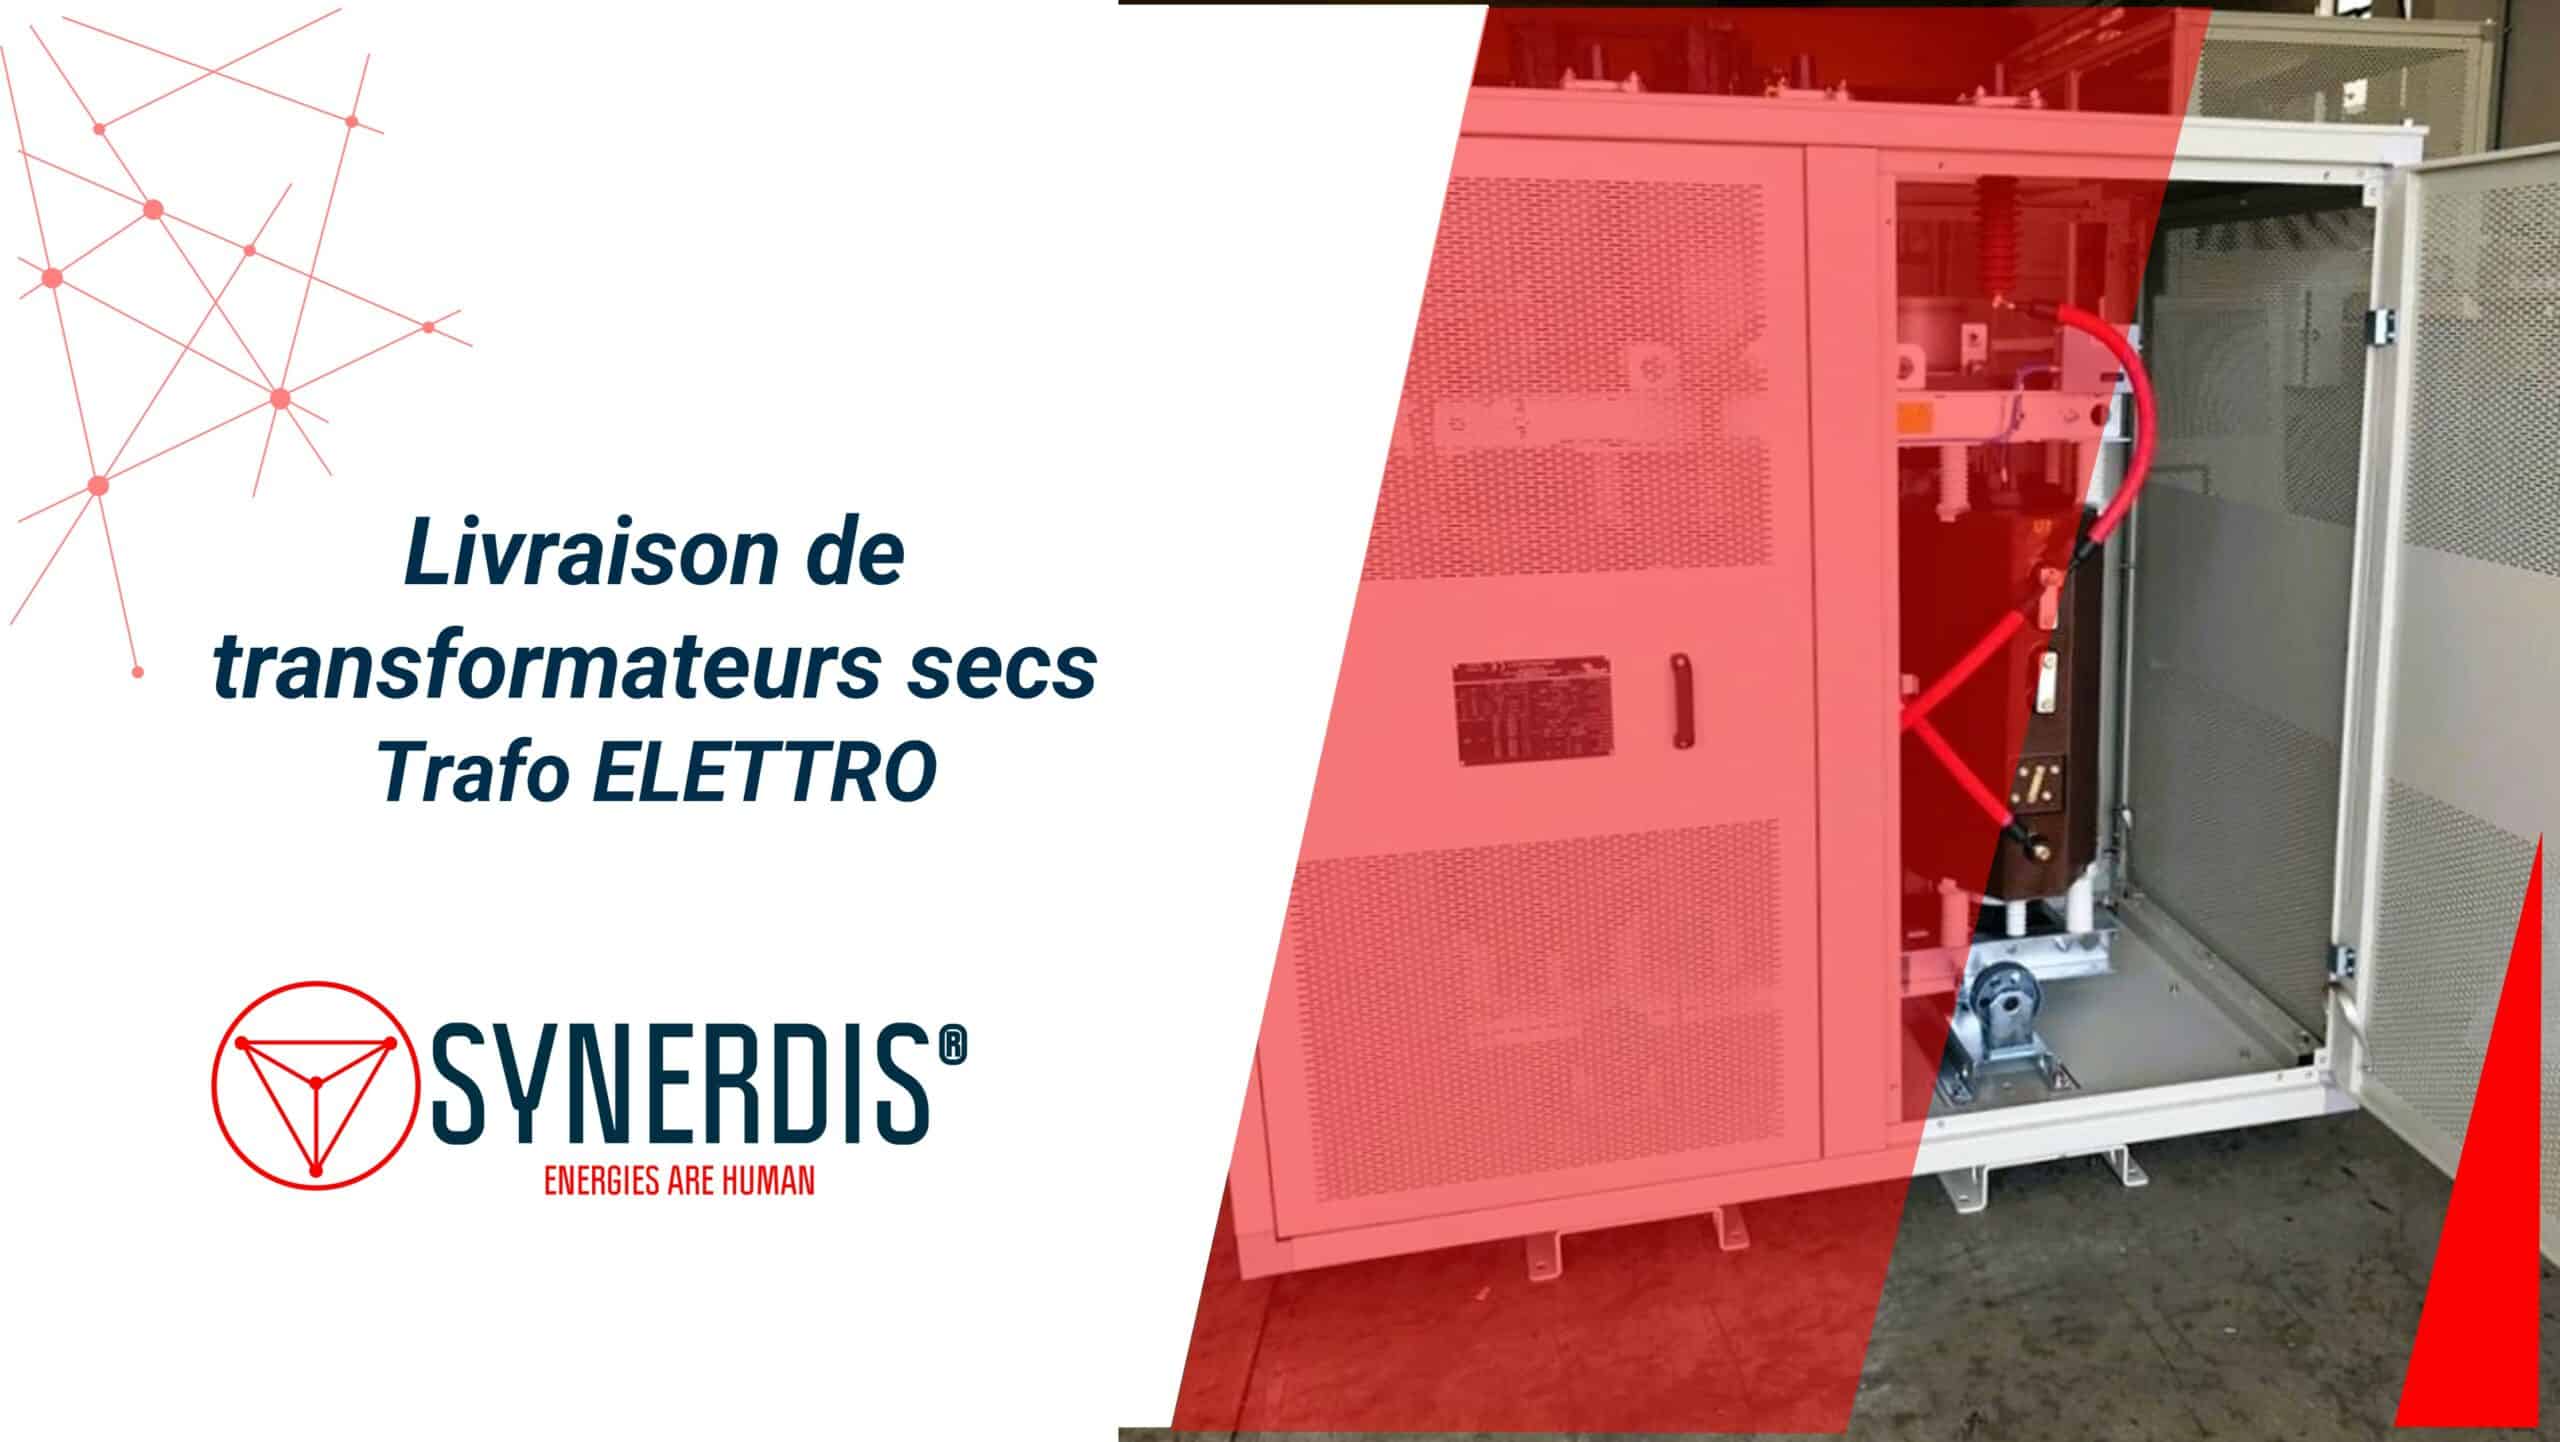 Entrega de transformadores secos Trafo ELETTRO para grandes fabricantes franceses